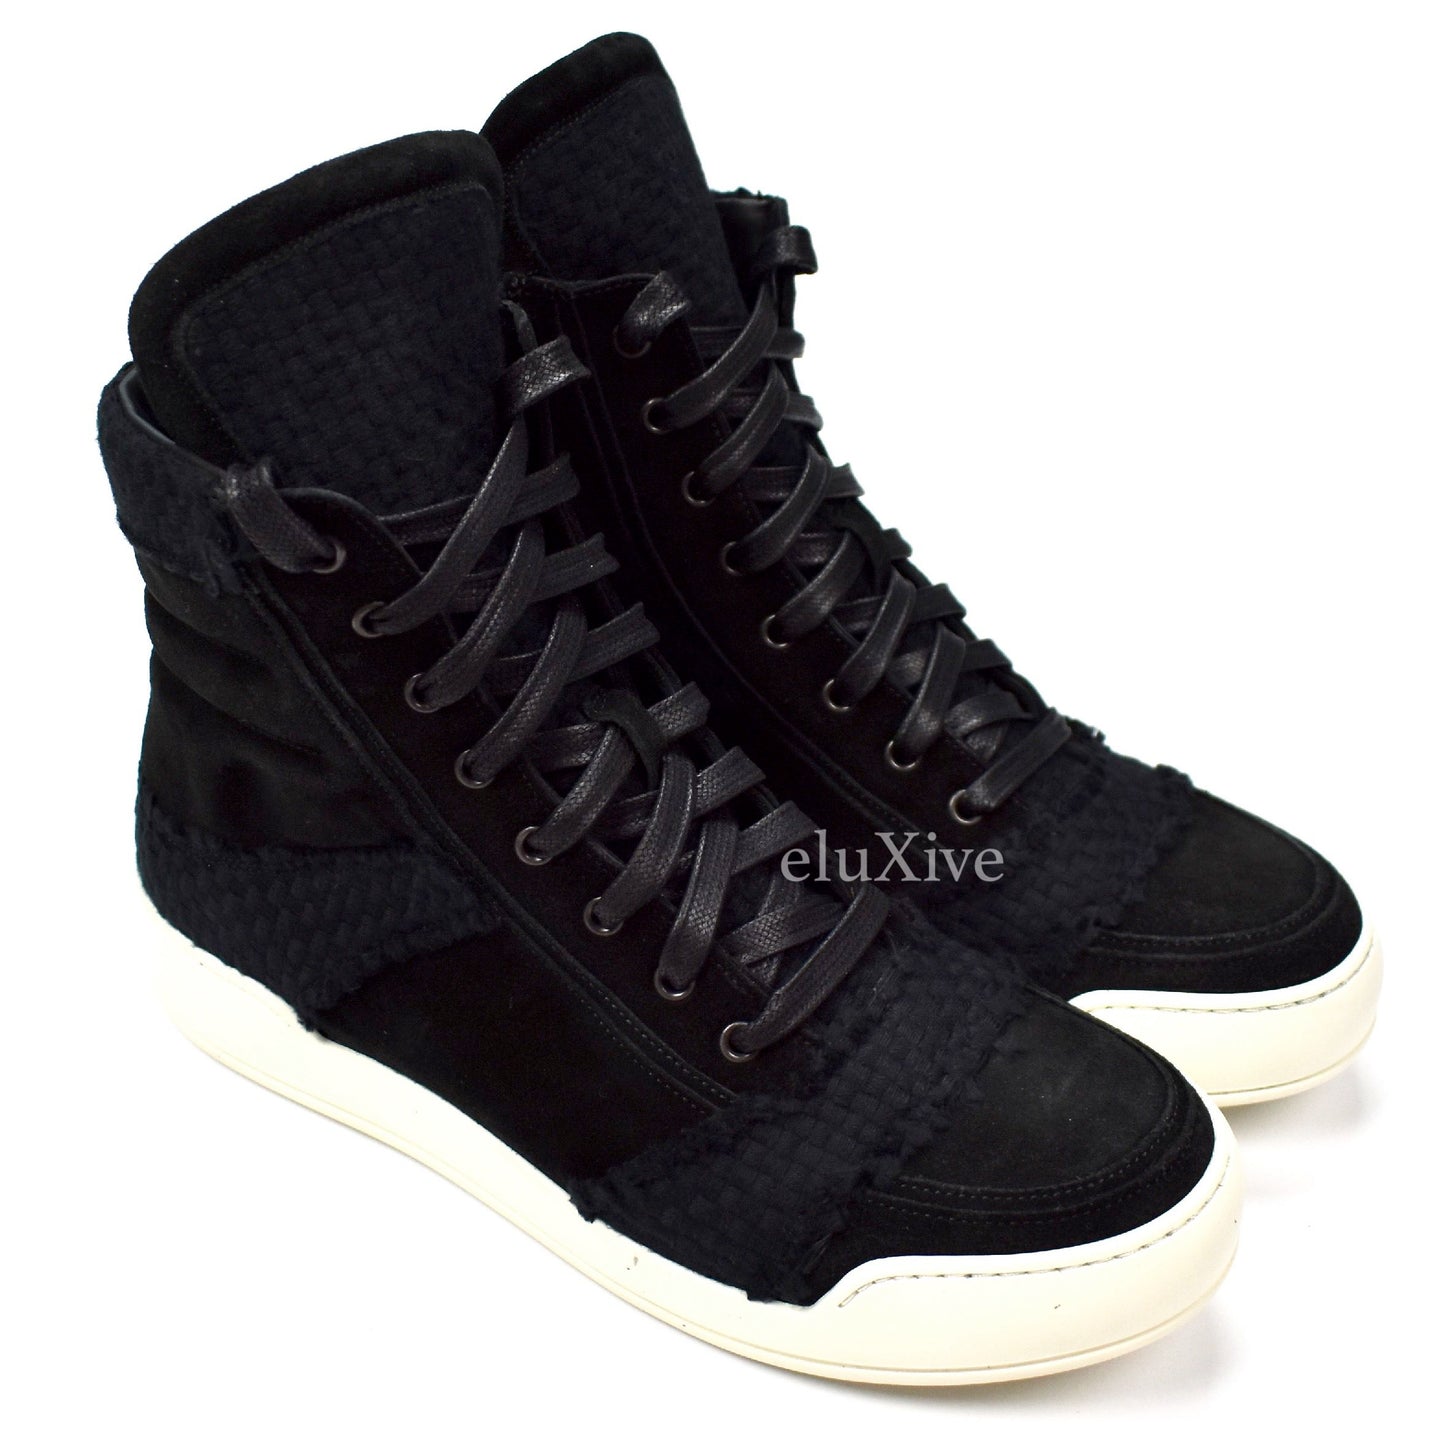 Balmain - Black Woven Suede Sneakers